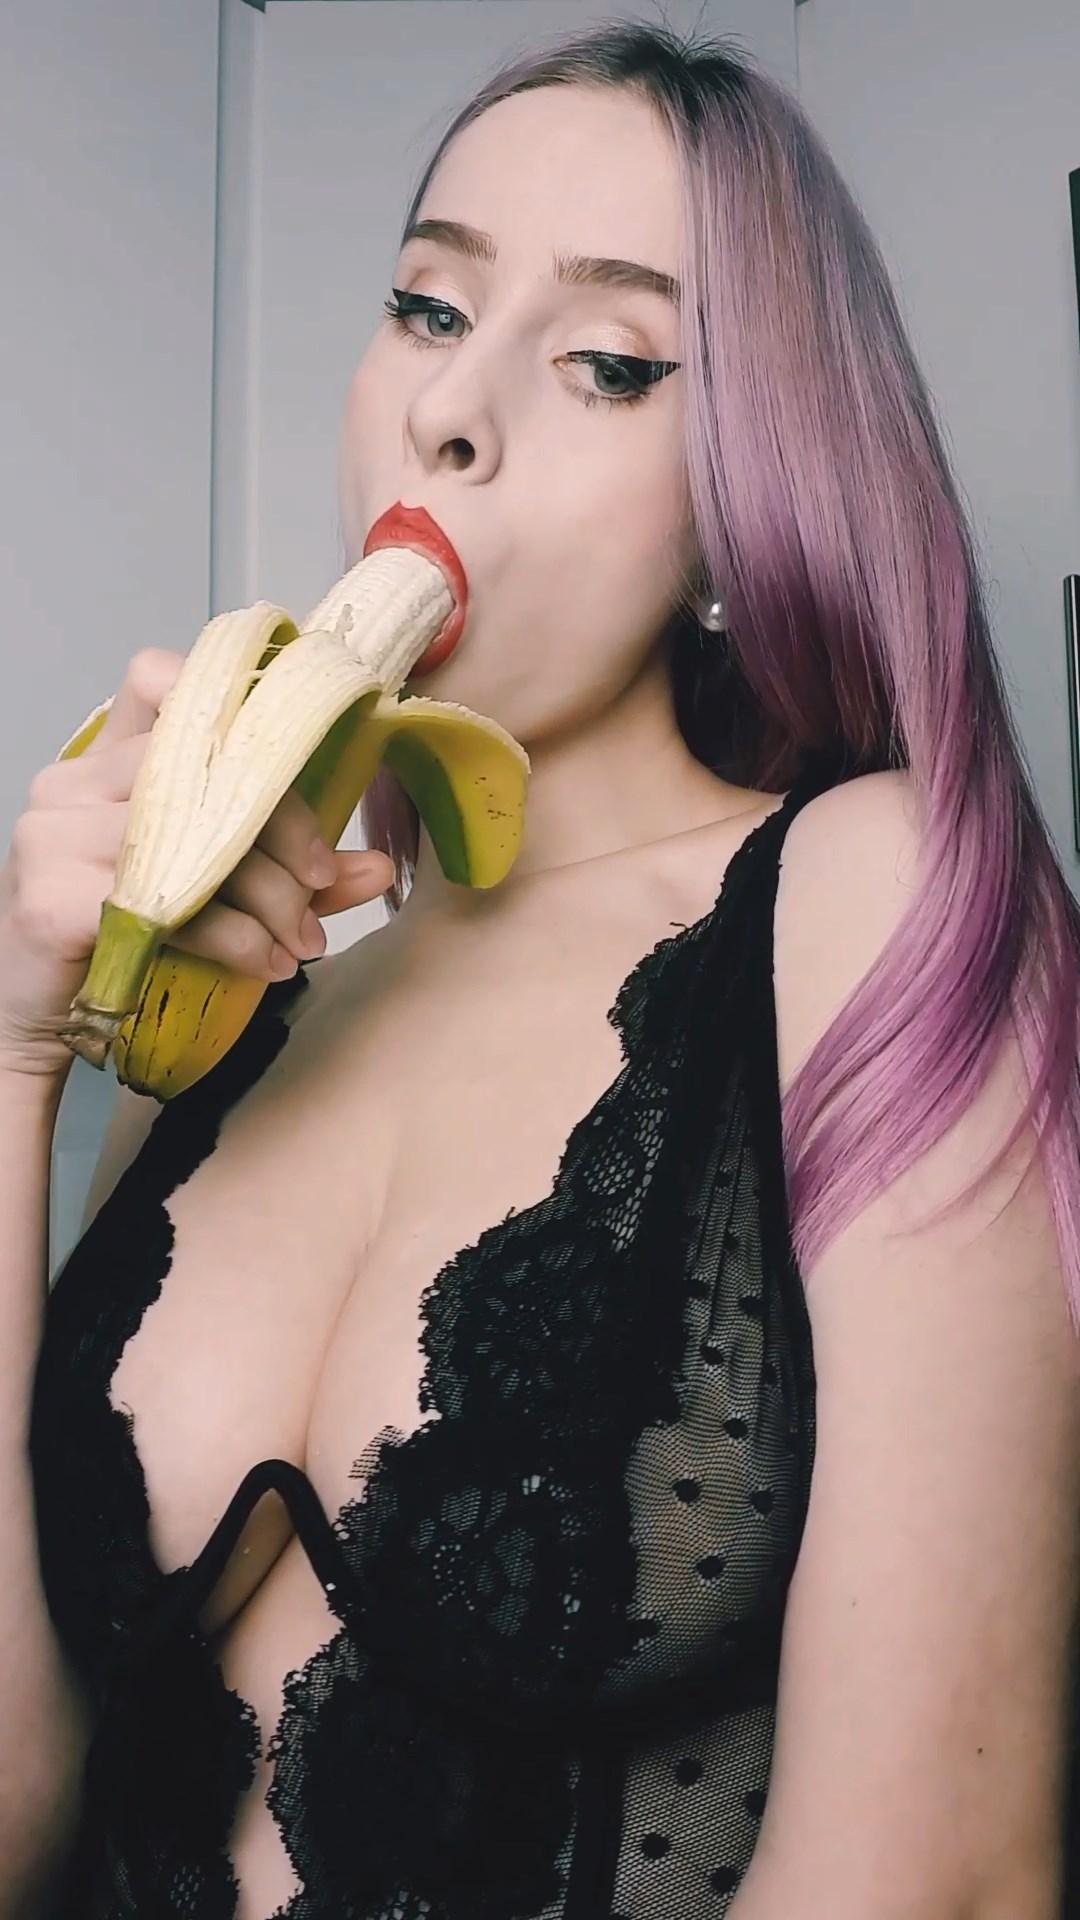 mizzycyn topless banana deep throat patreon video leaked DEBQVN